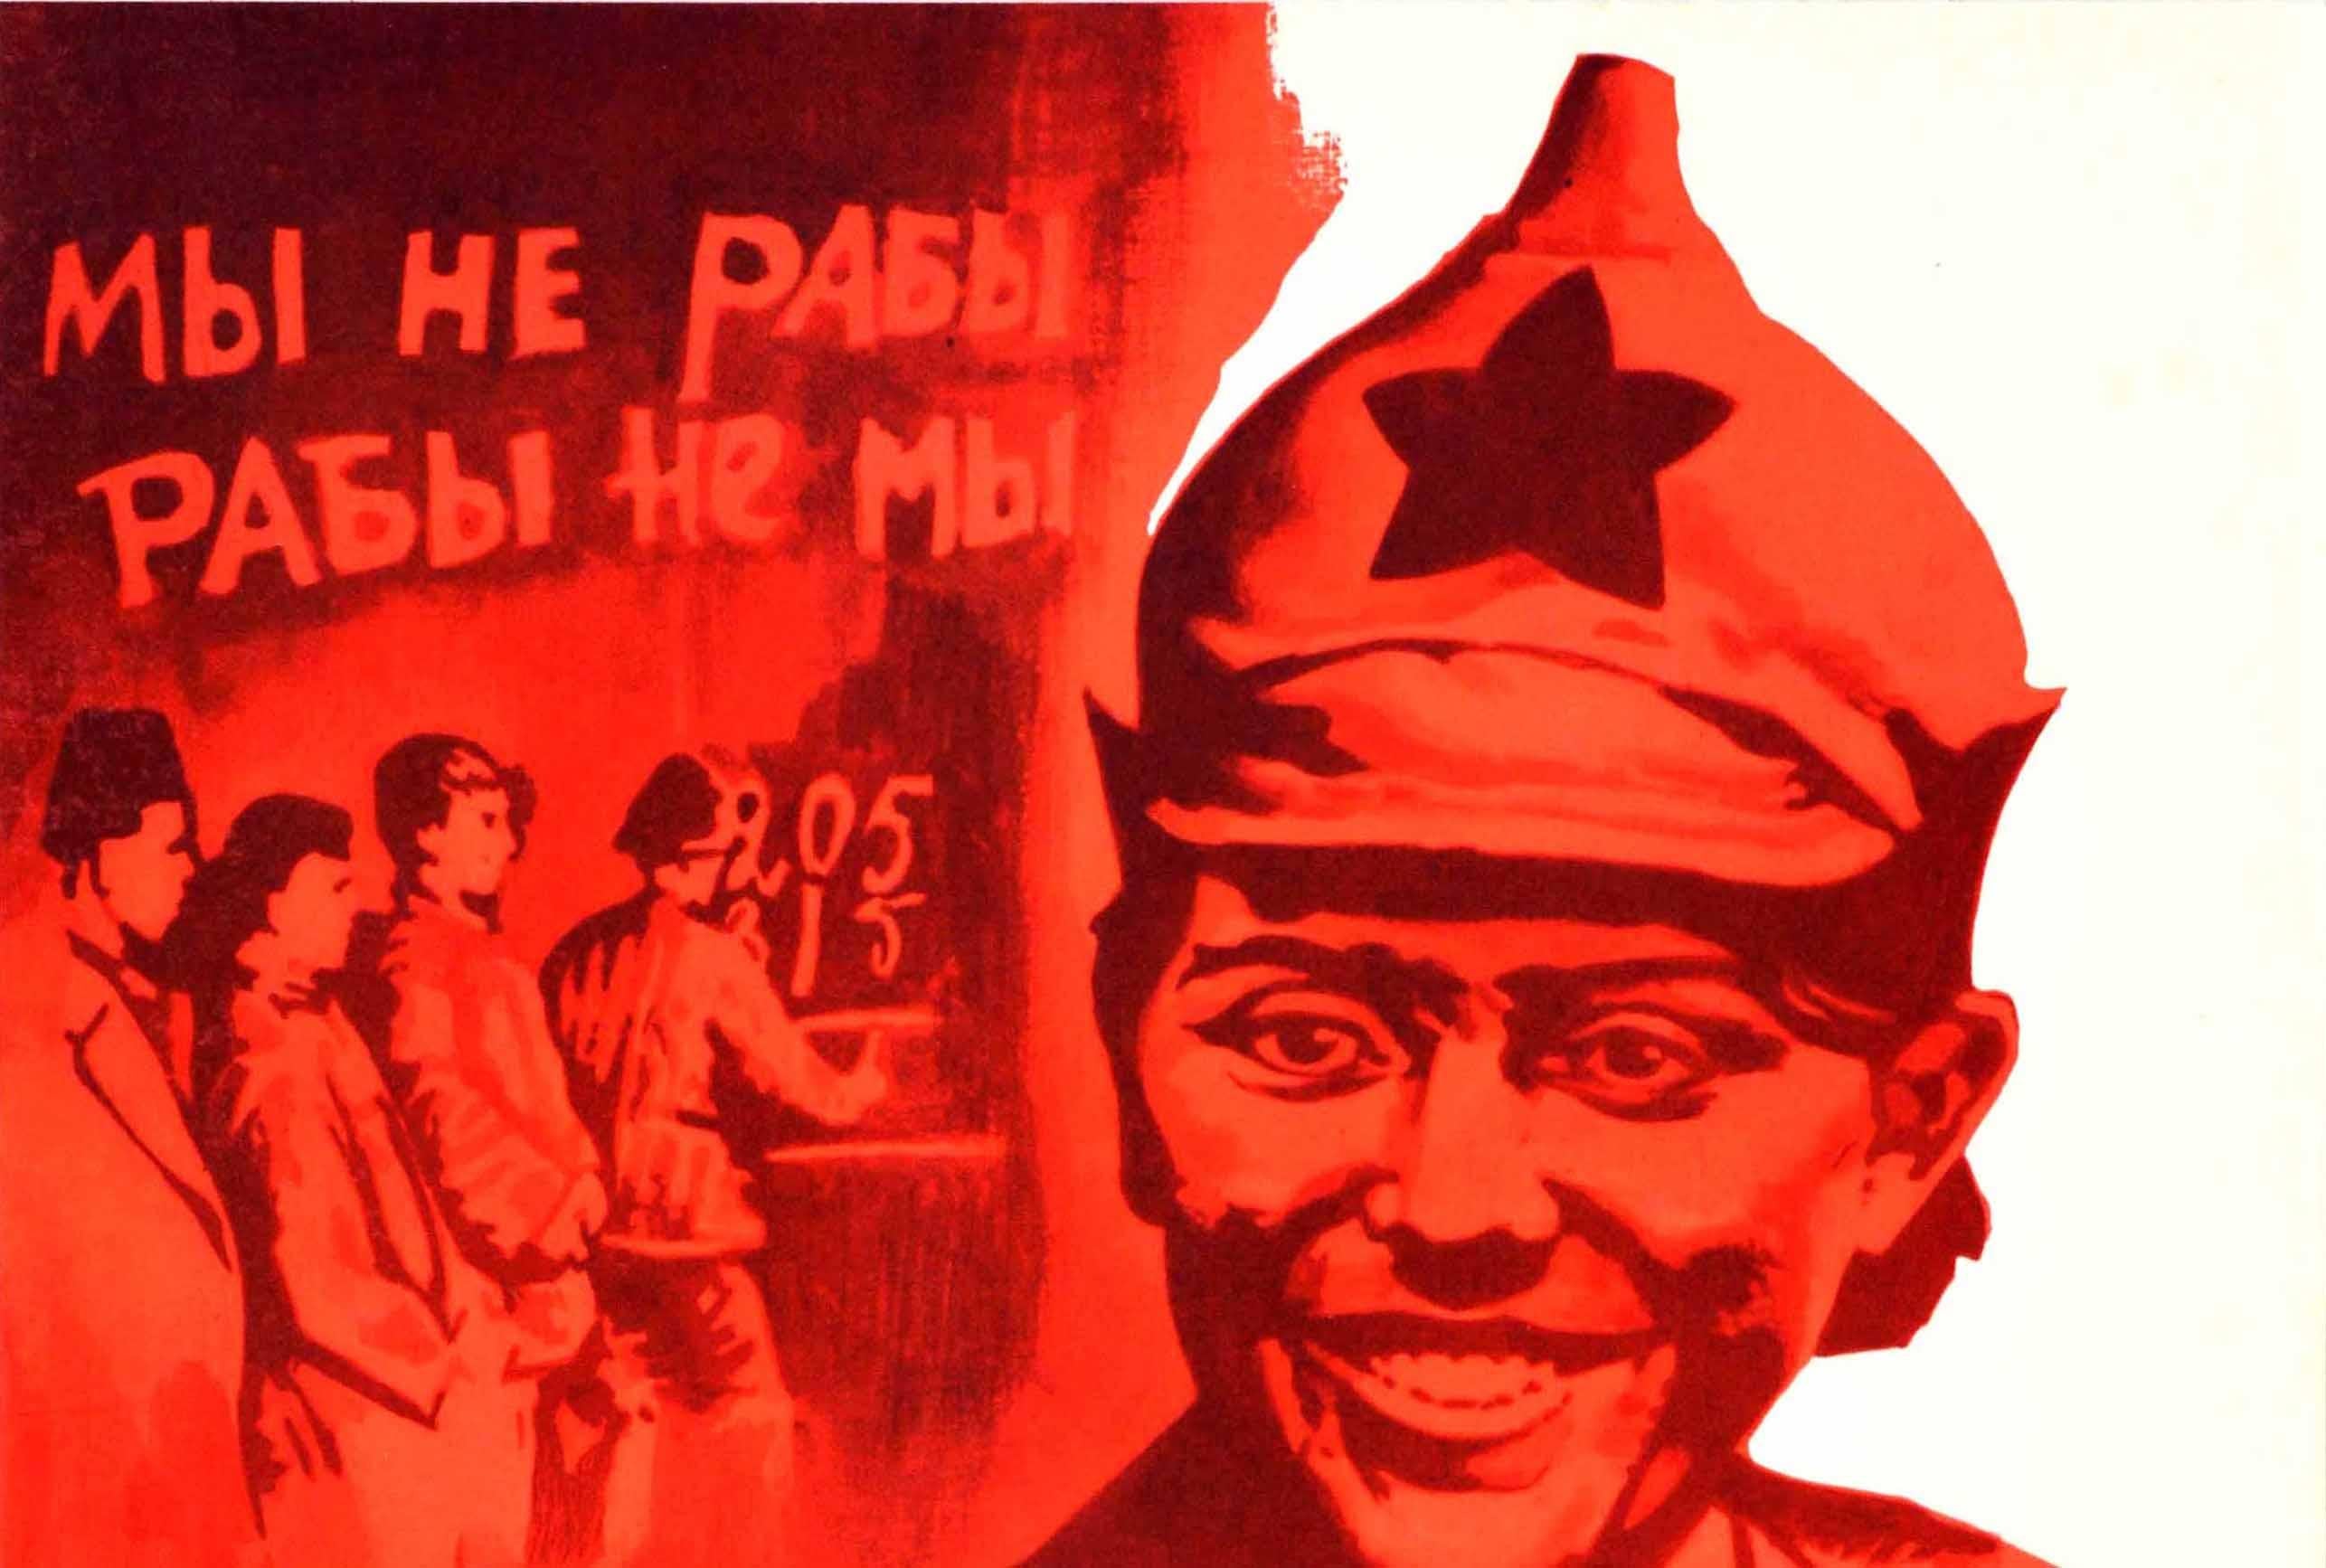 sputnik propaganda poster